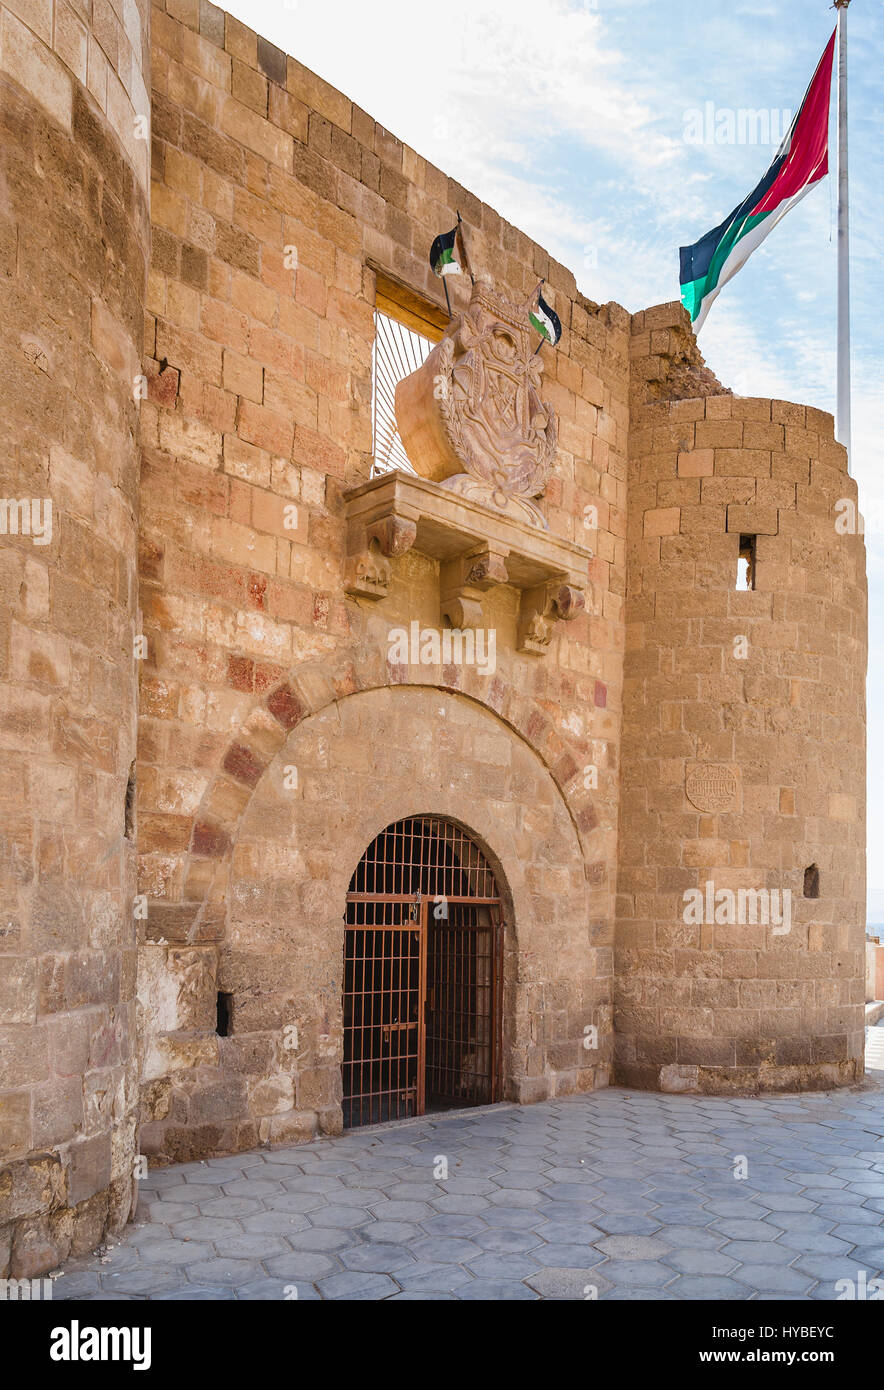 AQABA, JORDAN - FEBRUARY 23, 2012: entrace to Aqaba Fortress (Aqaba Castle, Mamluk Castle, Fort) and Flag of the Arab Revolt. The port of Aqaba was ma Stock Photo